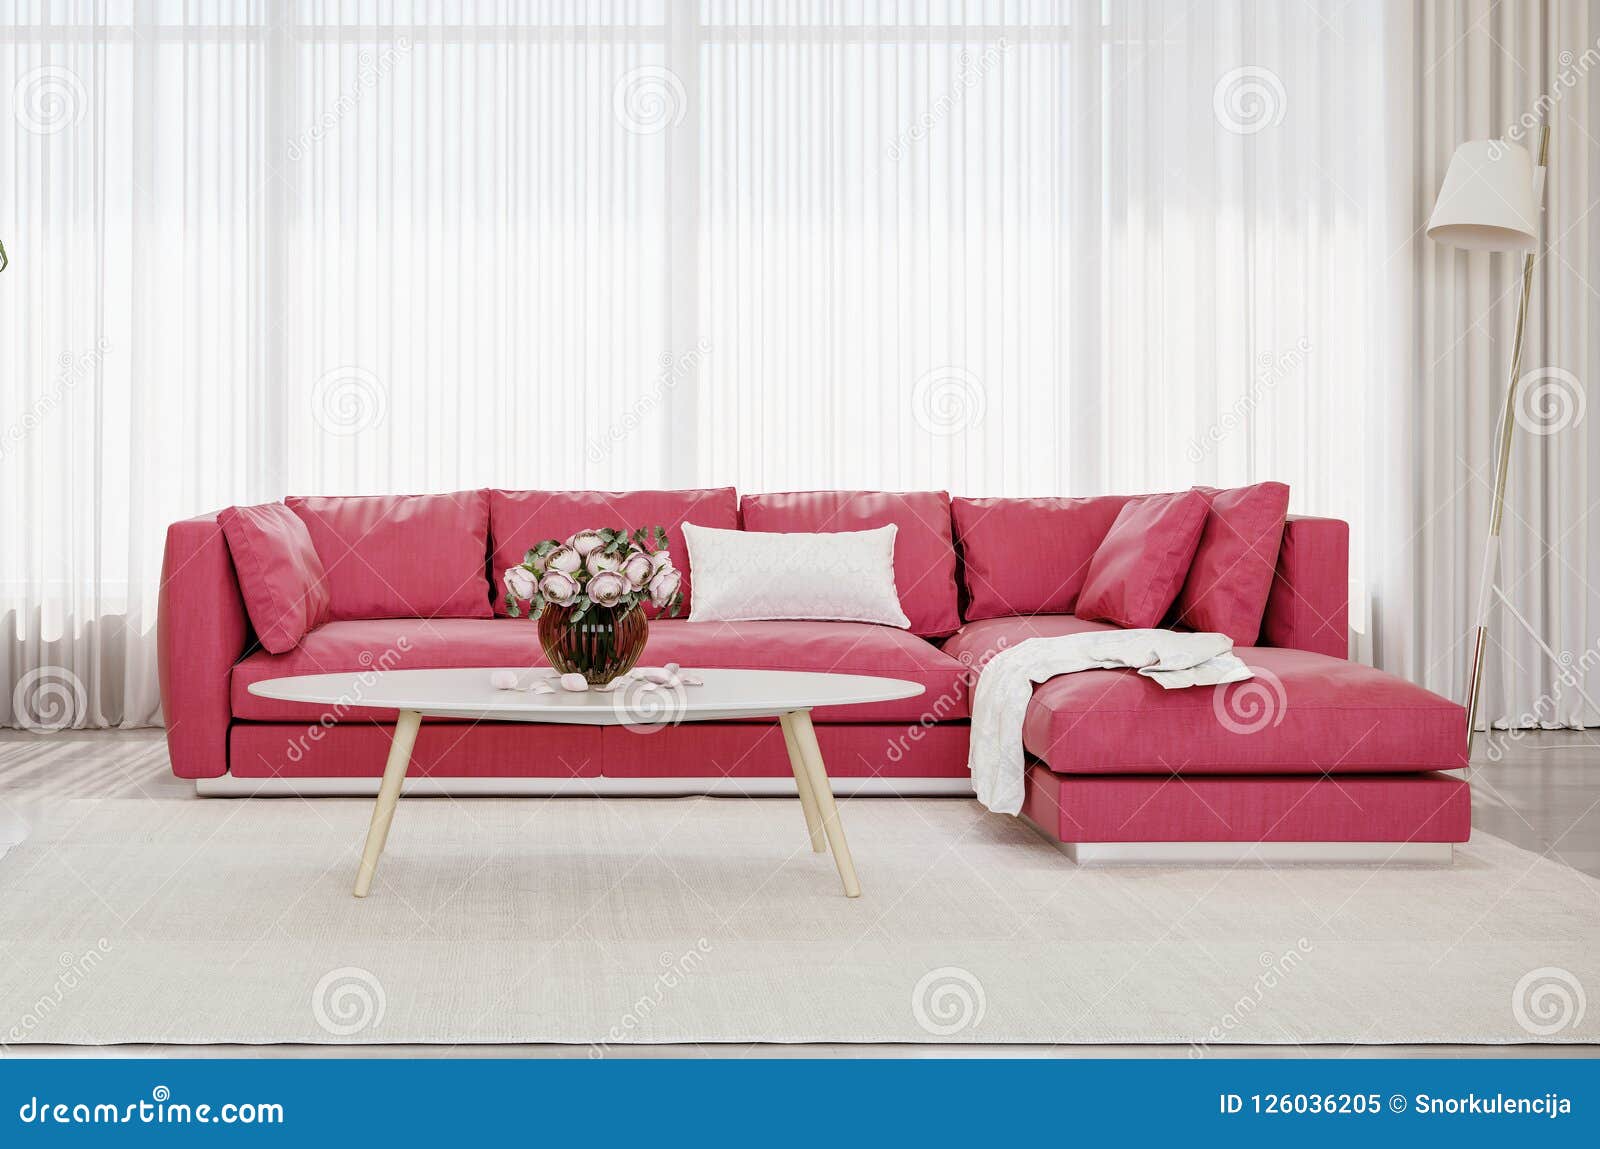 modern red sofa living room ideas